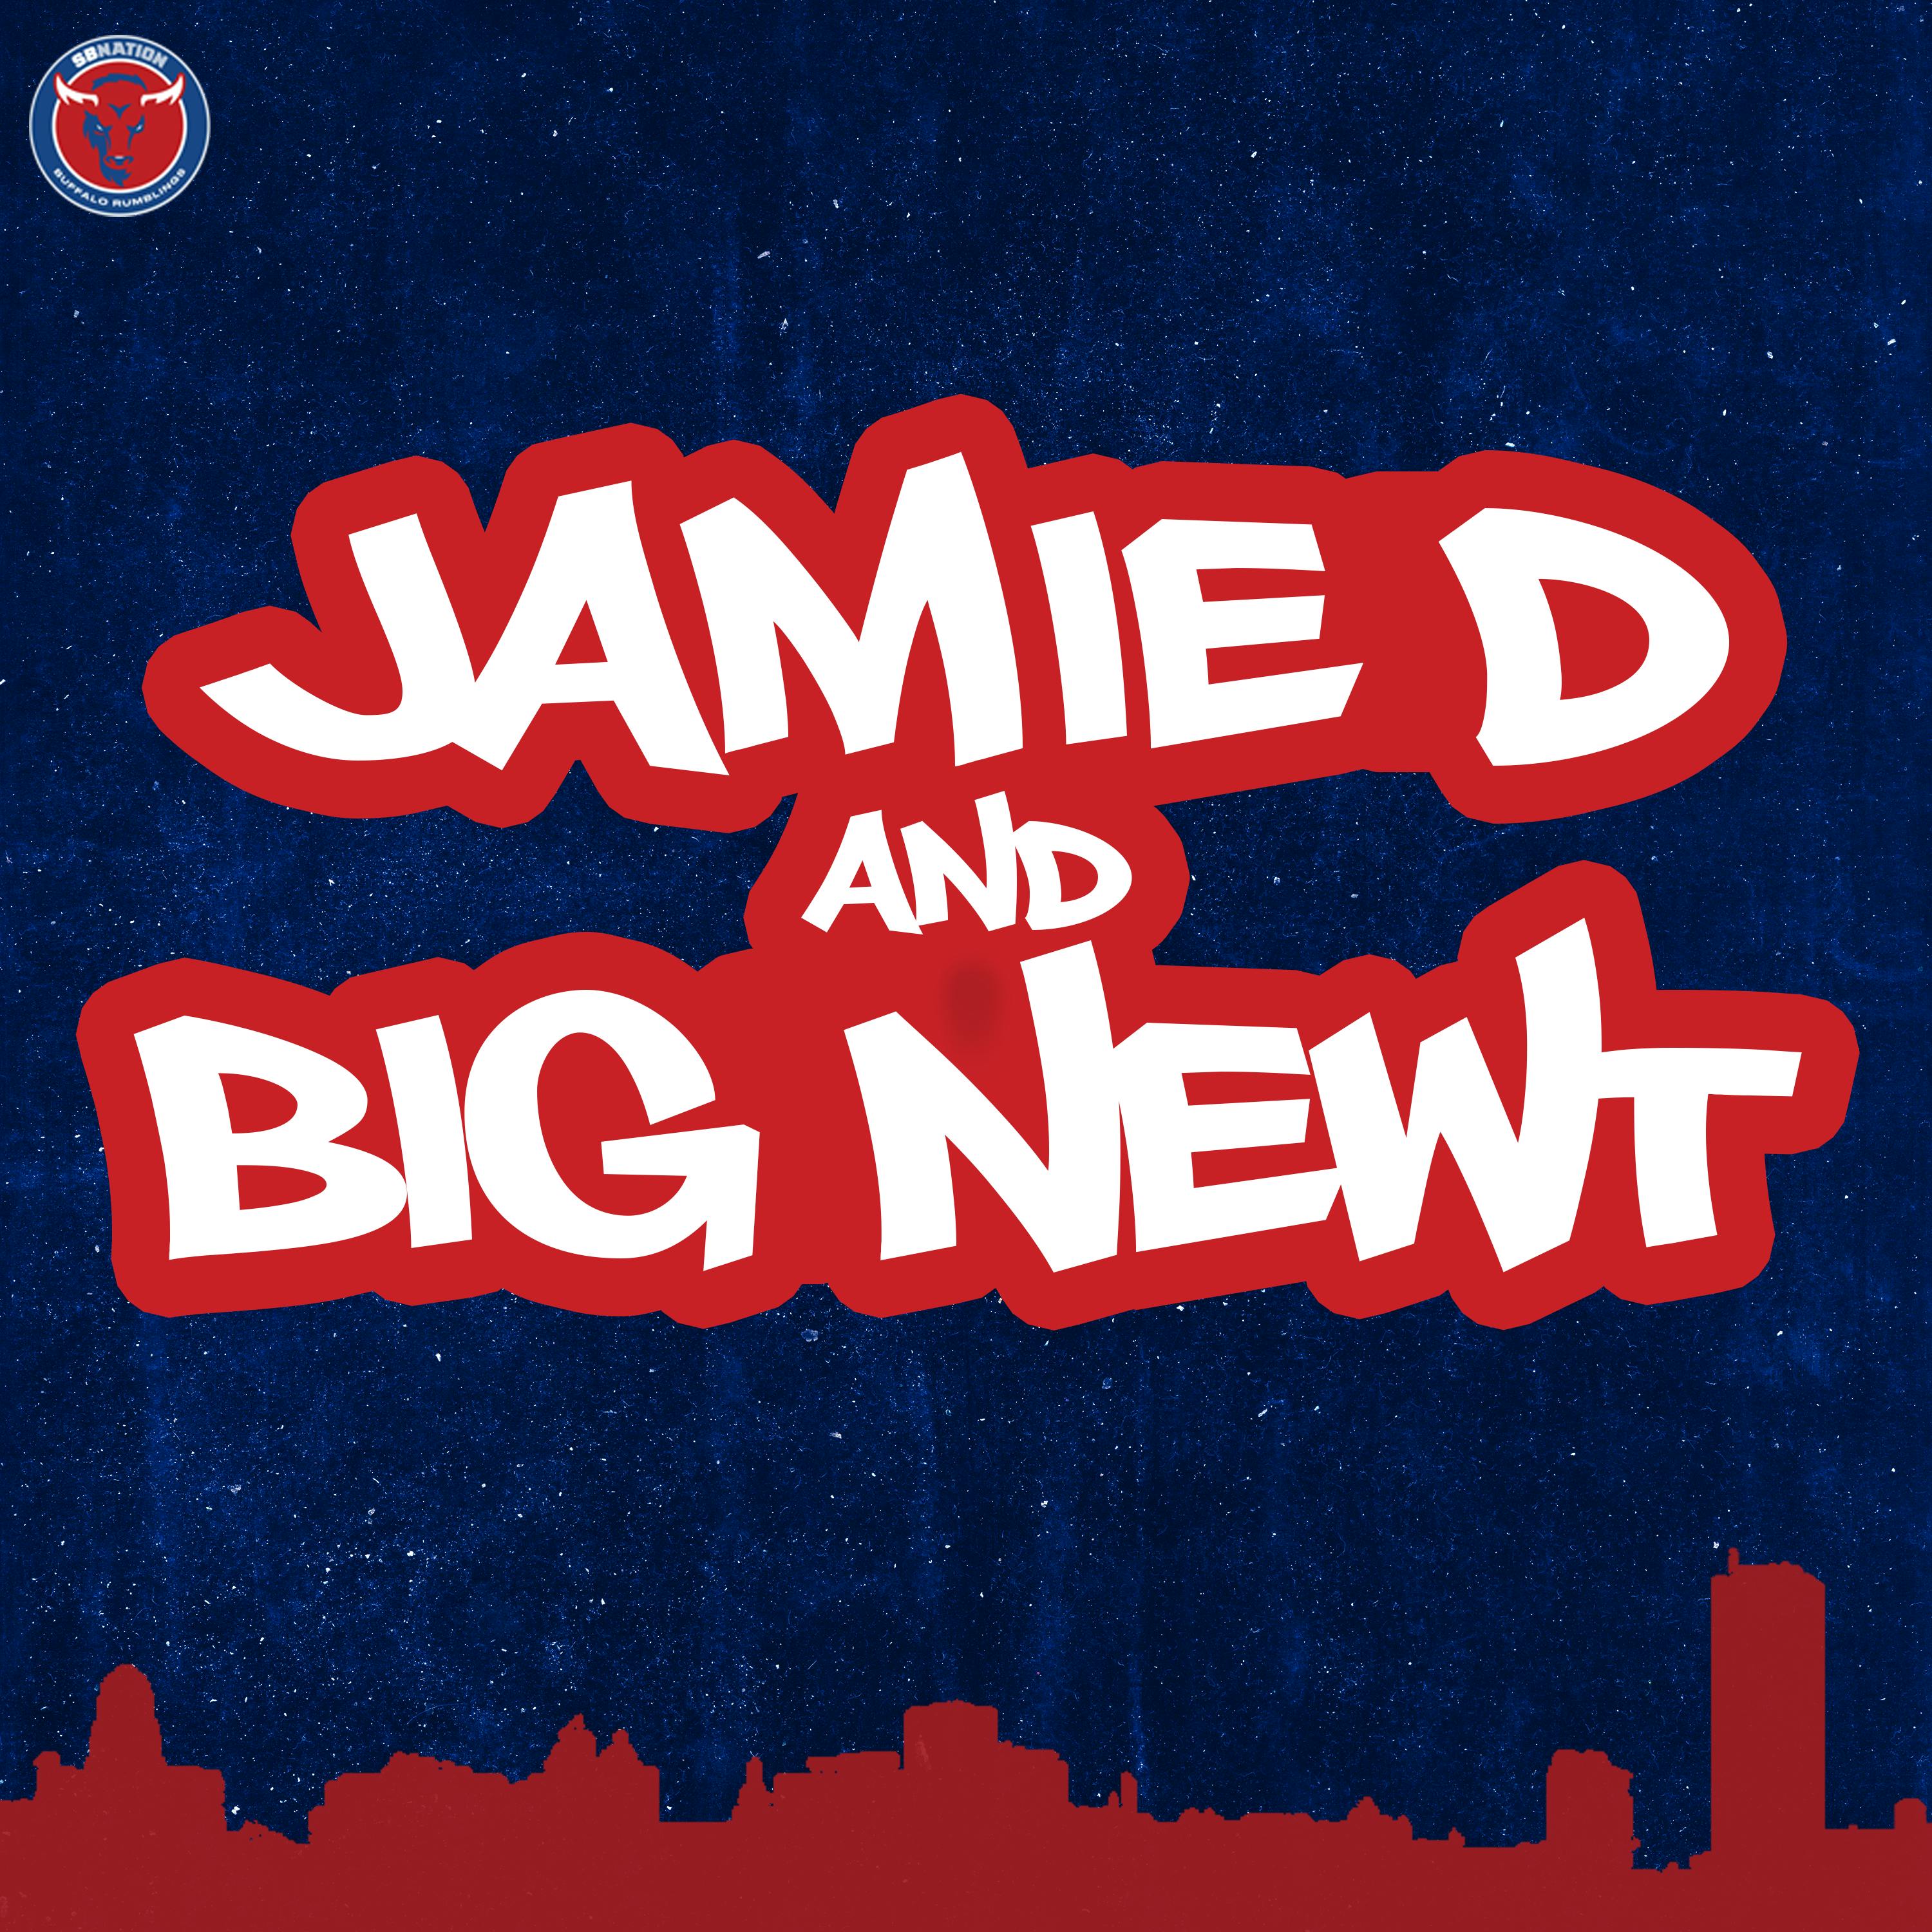 Jamie D & Big Newt: Buffalo Bills the Class of AFC